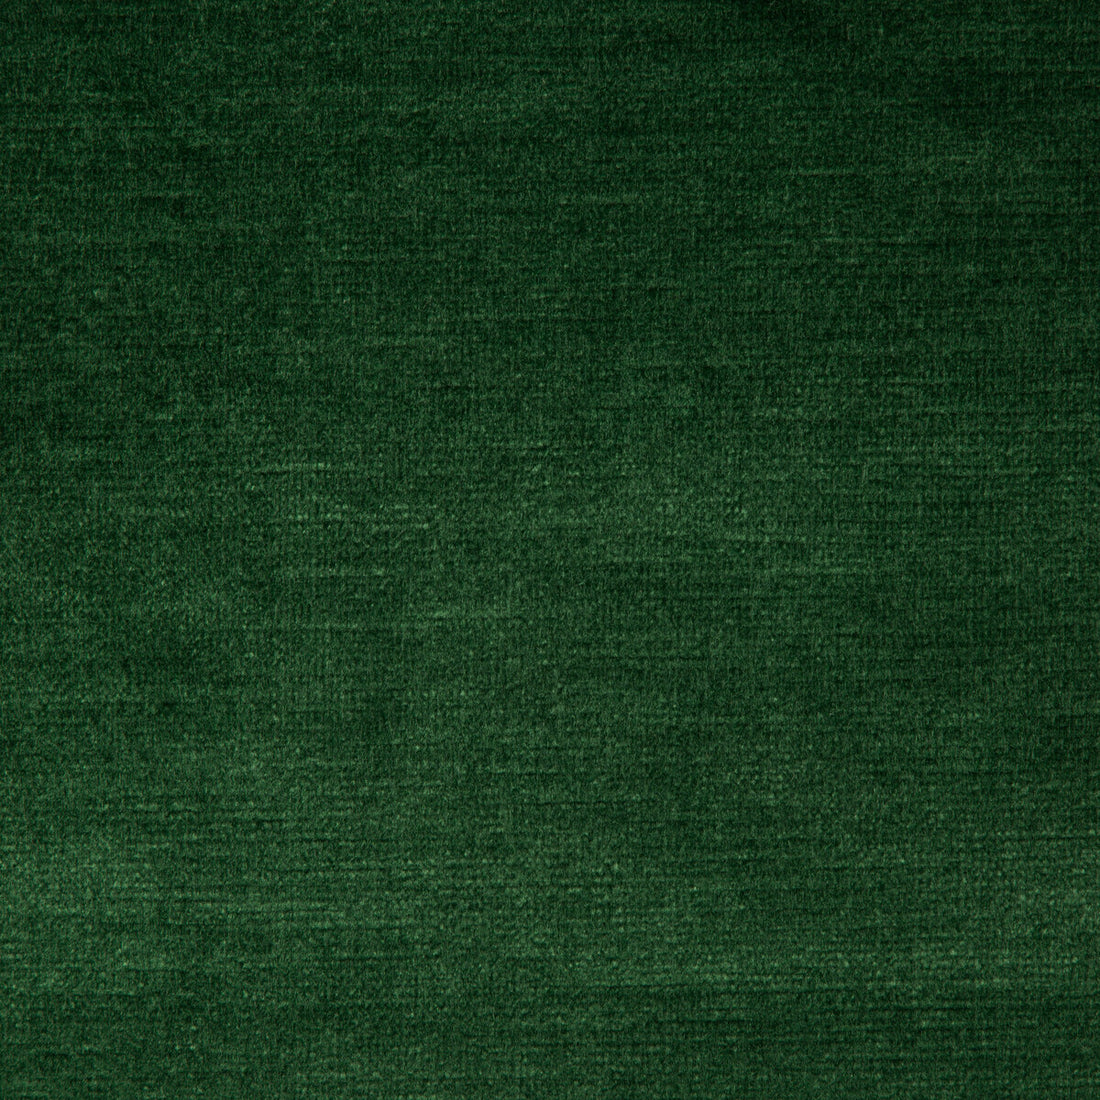 Venetian fabric in forest color - pattern 31326.330.0 - by Kravet Design